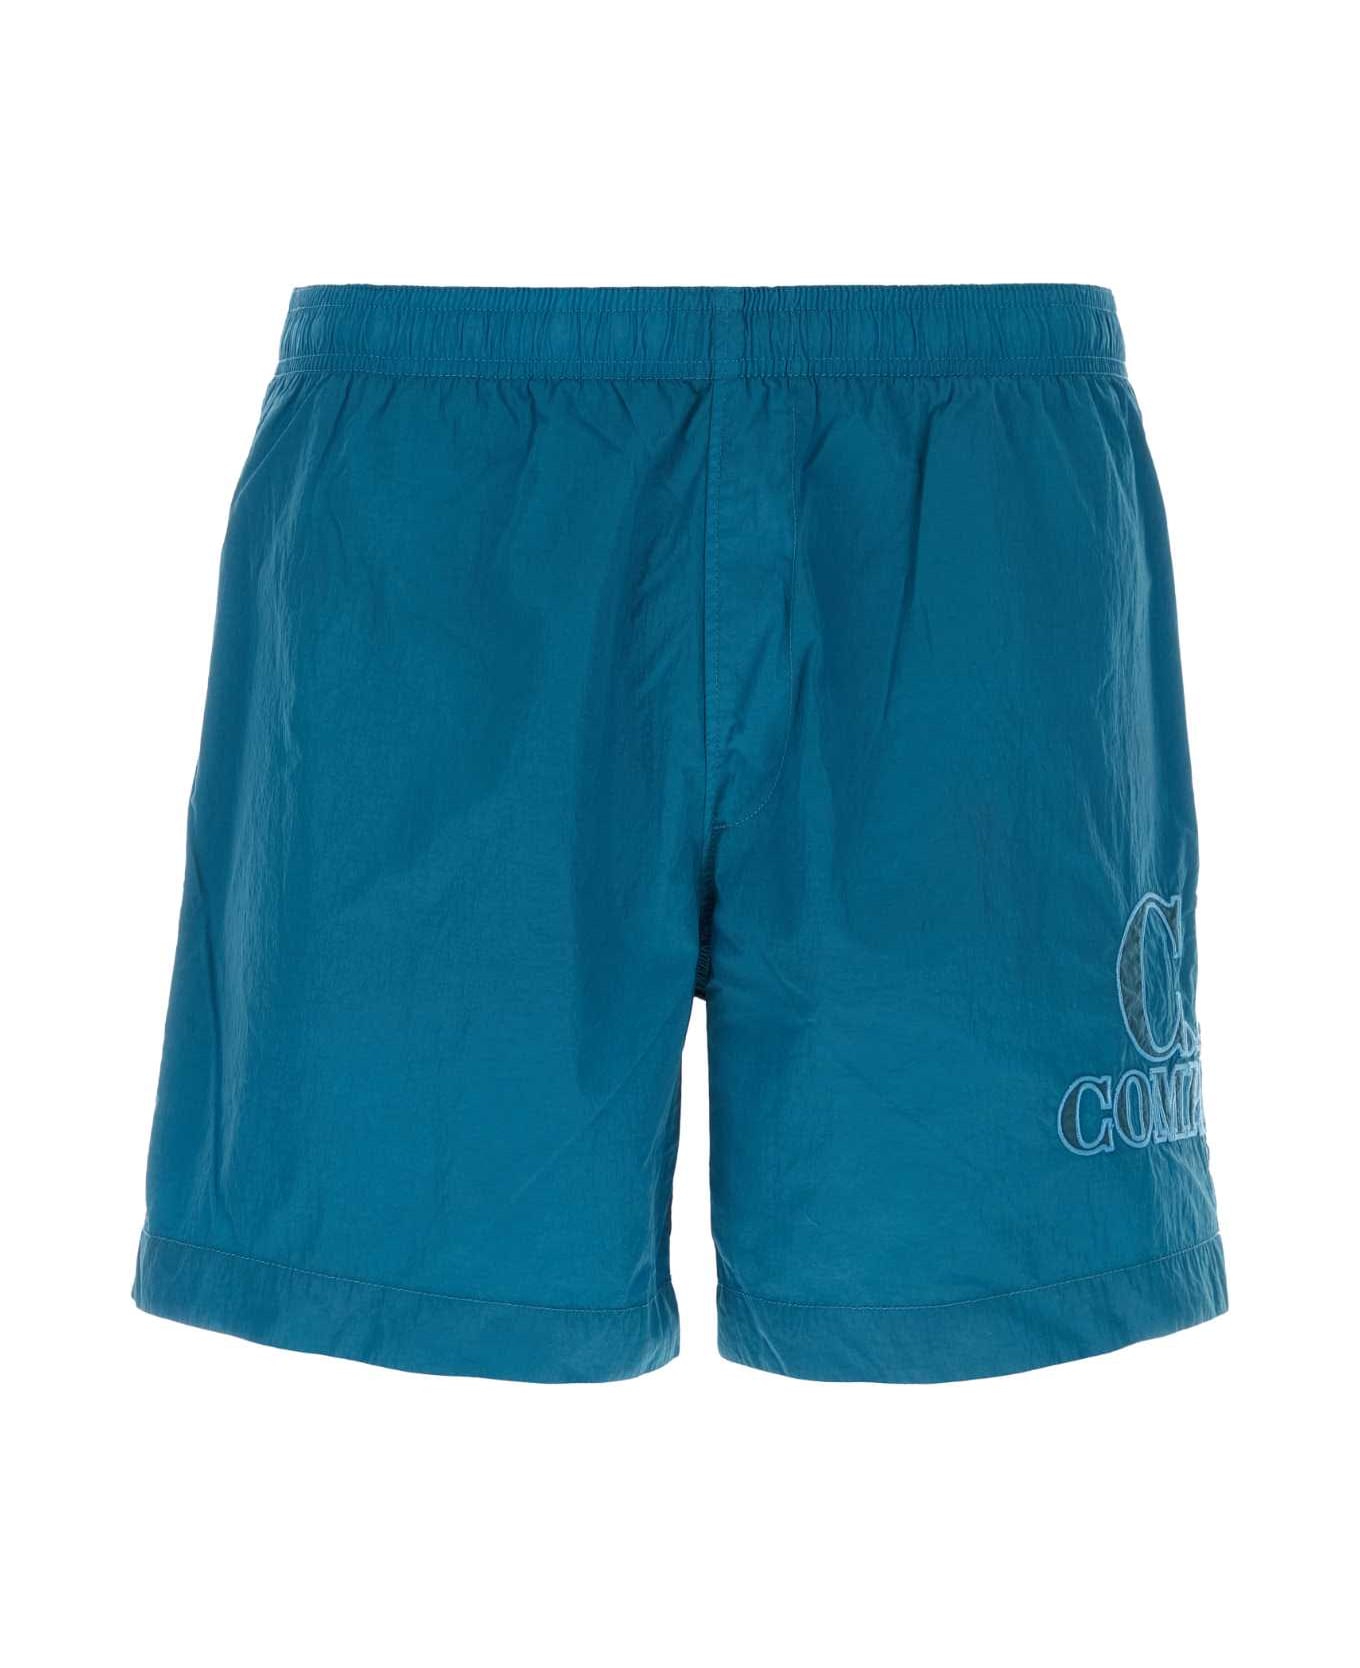 C.P. Company Air Force Blue Nylon Swimming Shorts - INKBLUE